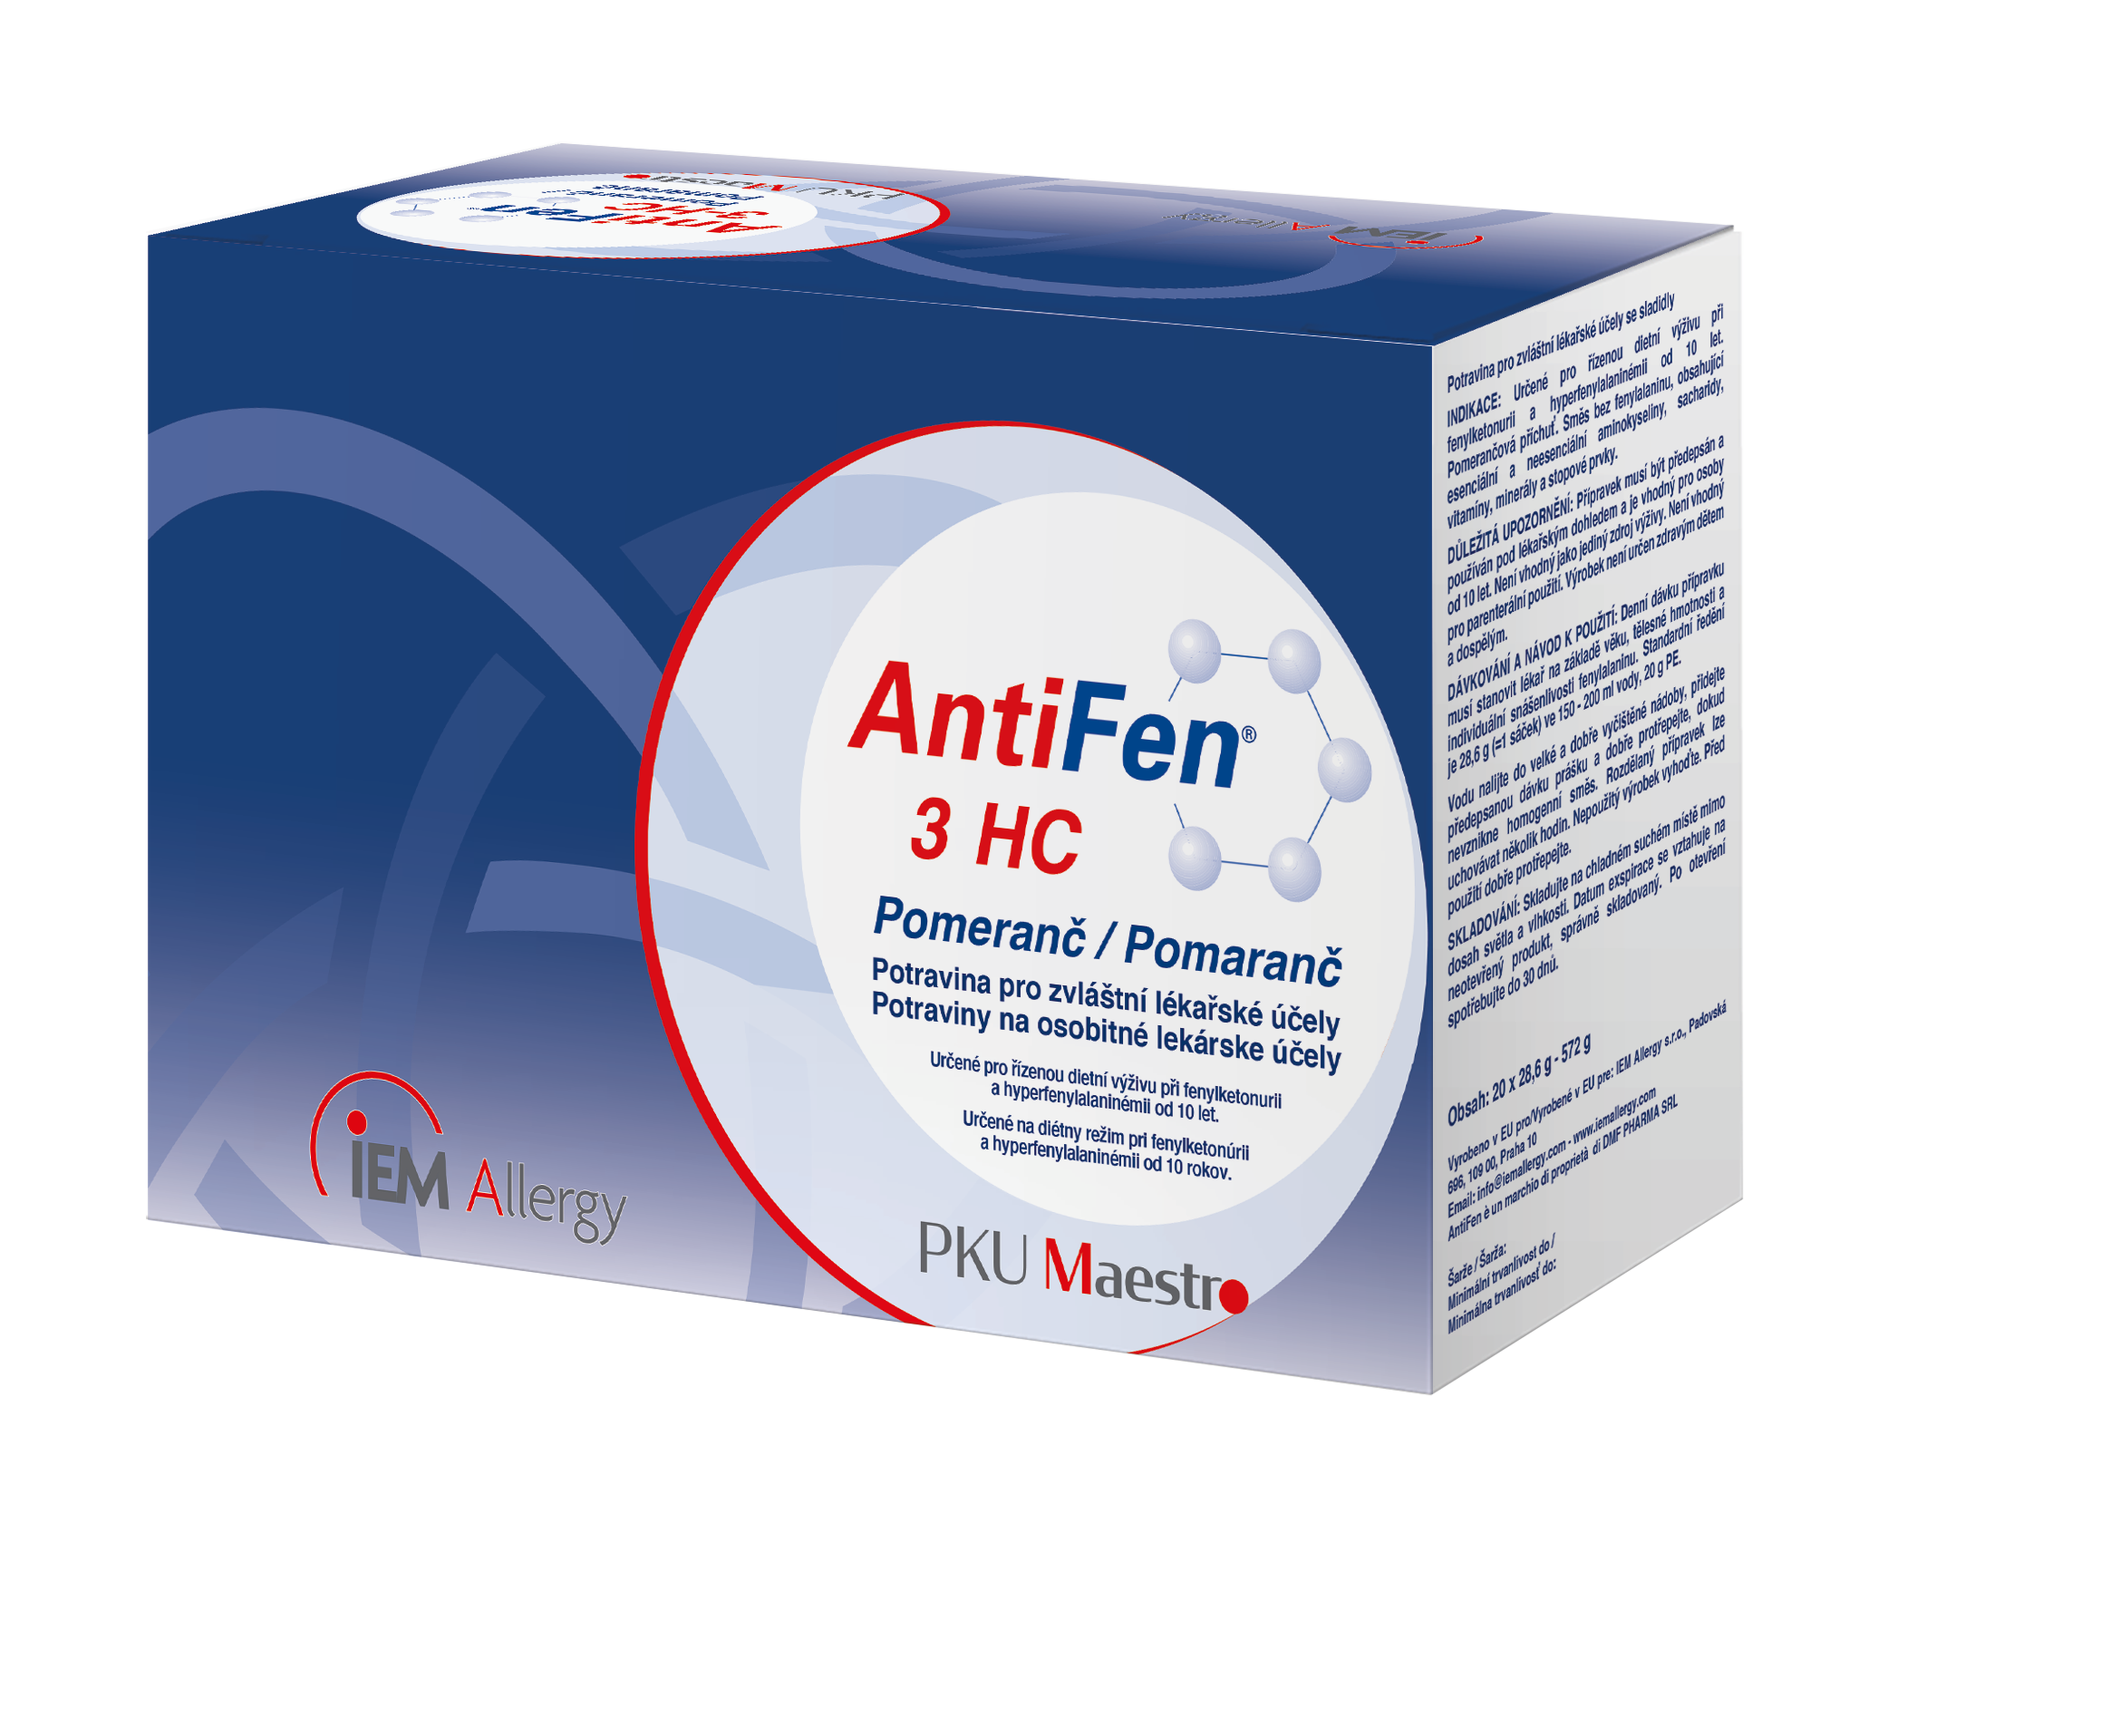 AntiFen 3 HC Pomaranč